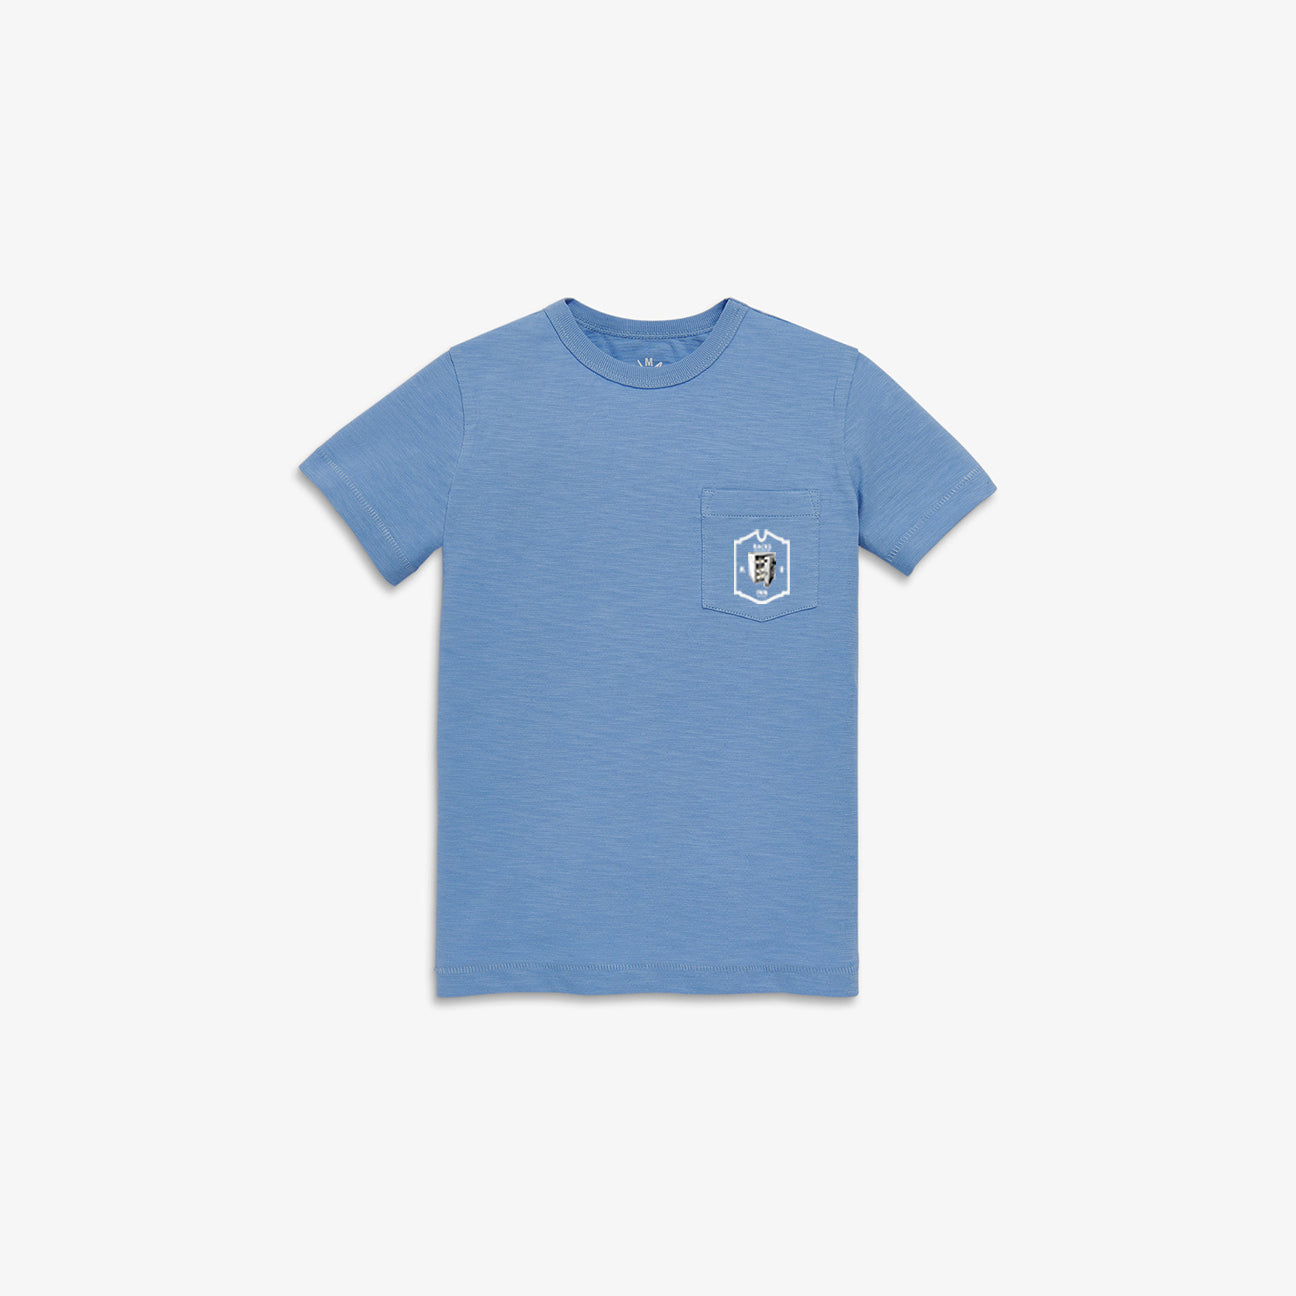 Pocket Mini Money Shirt - Dust Blue